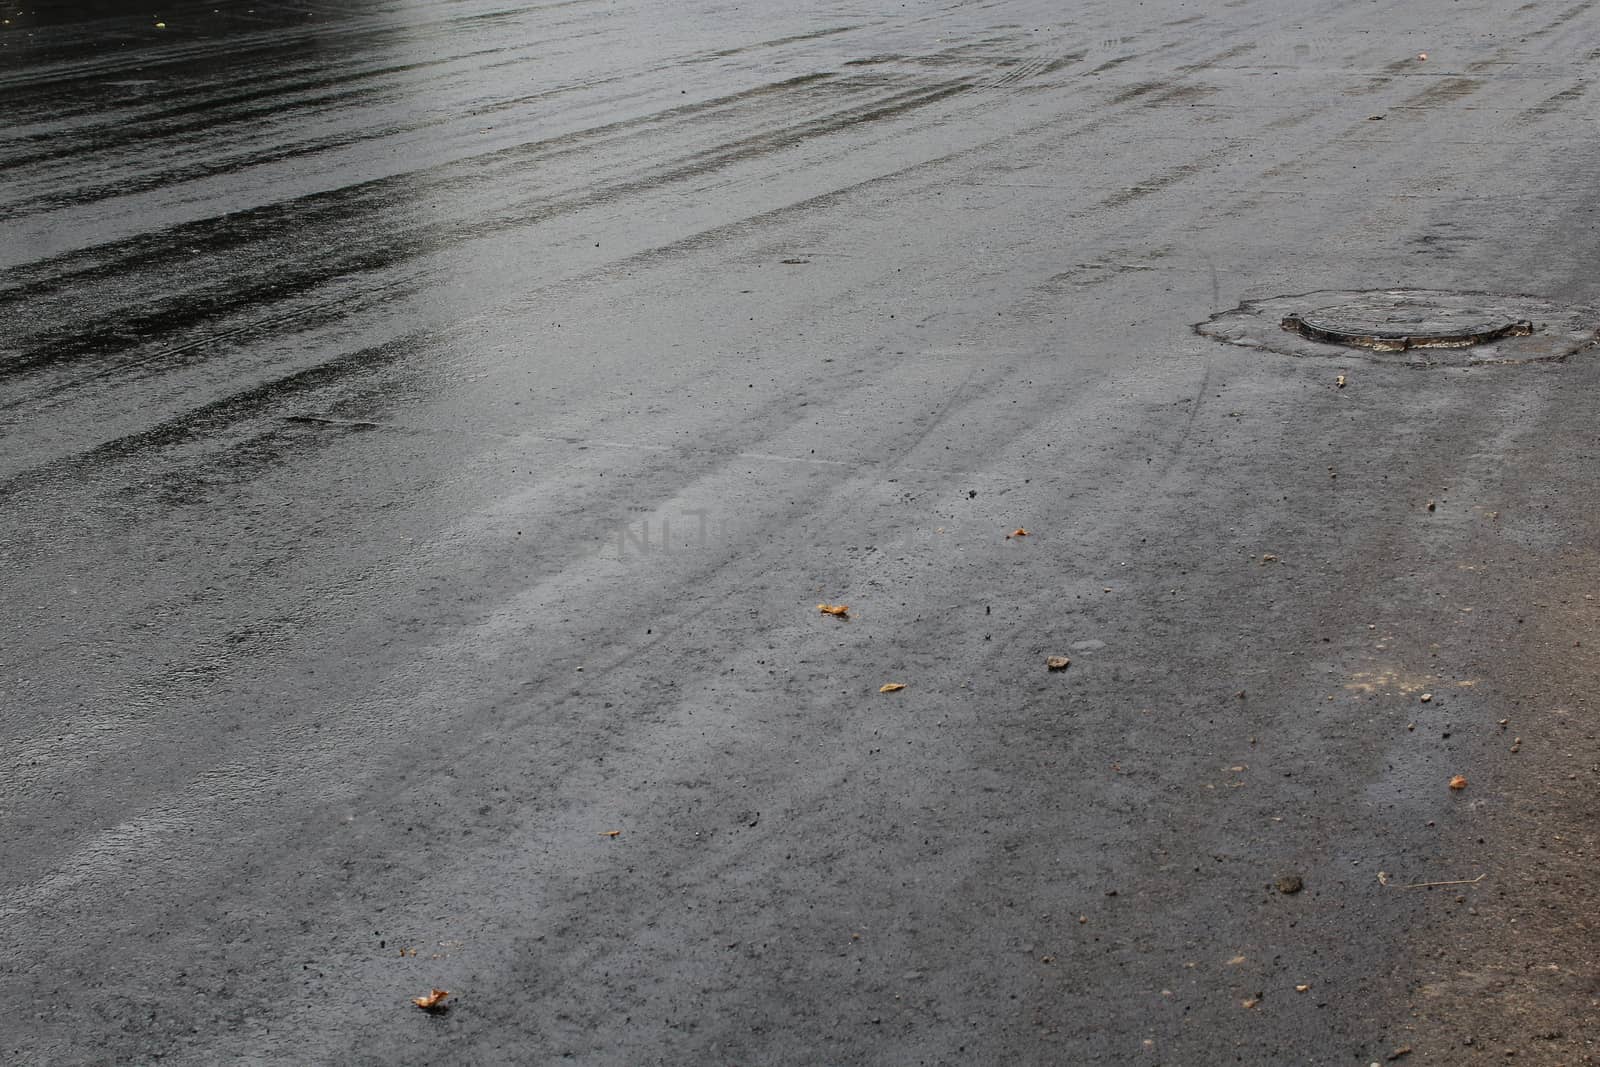 Freshly laid black tar asphalt pavement - a new road surface made of bitumen.